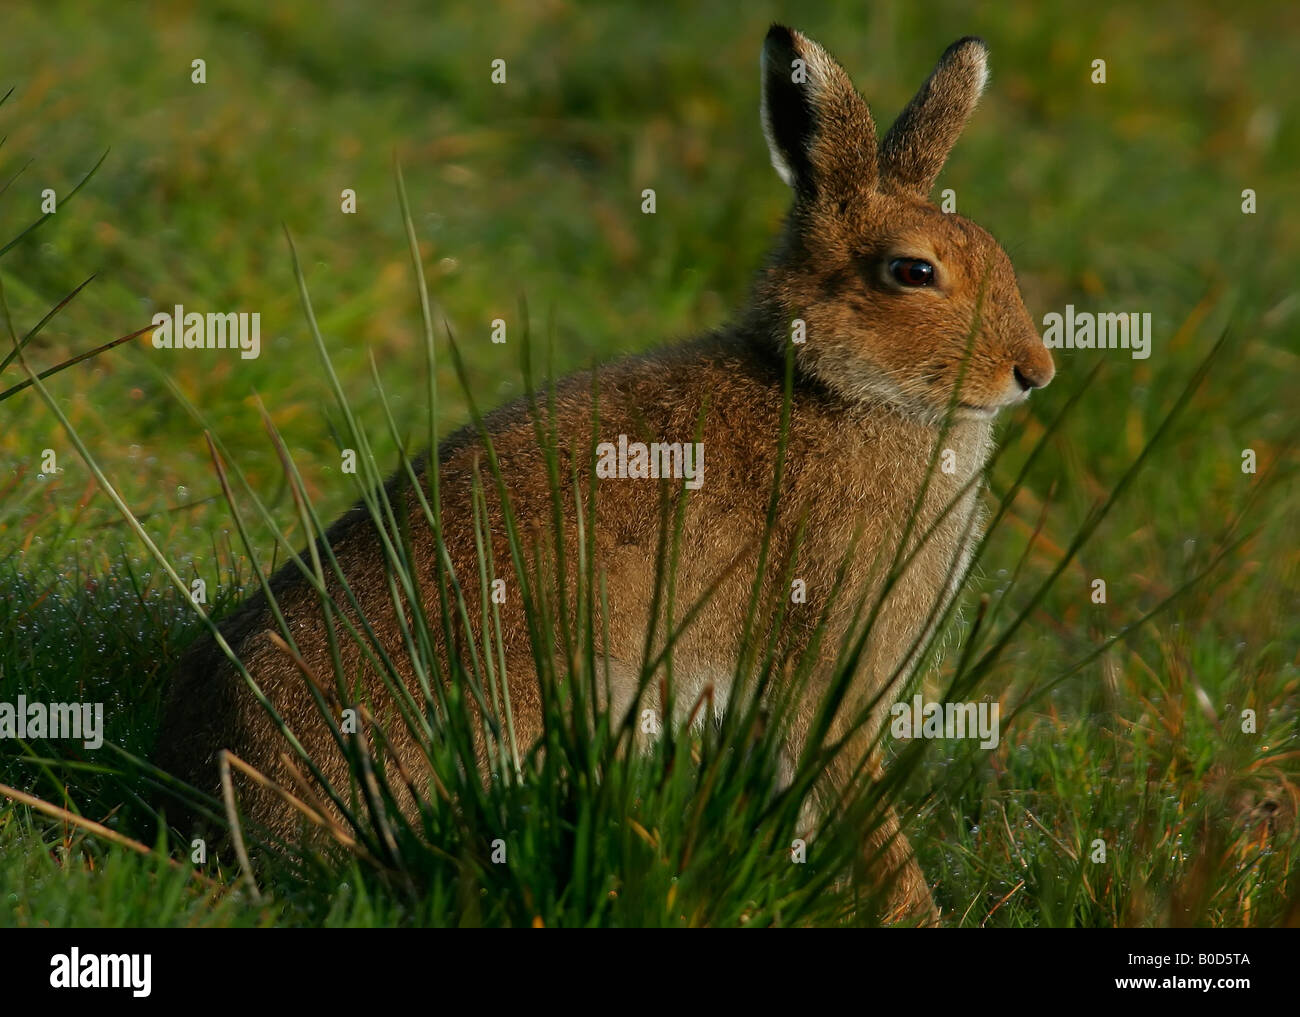 Irish or Mountain Hare. Stock Photo